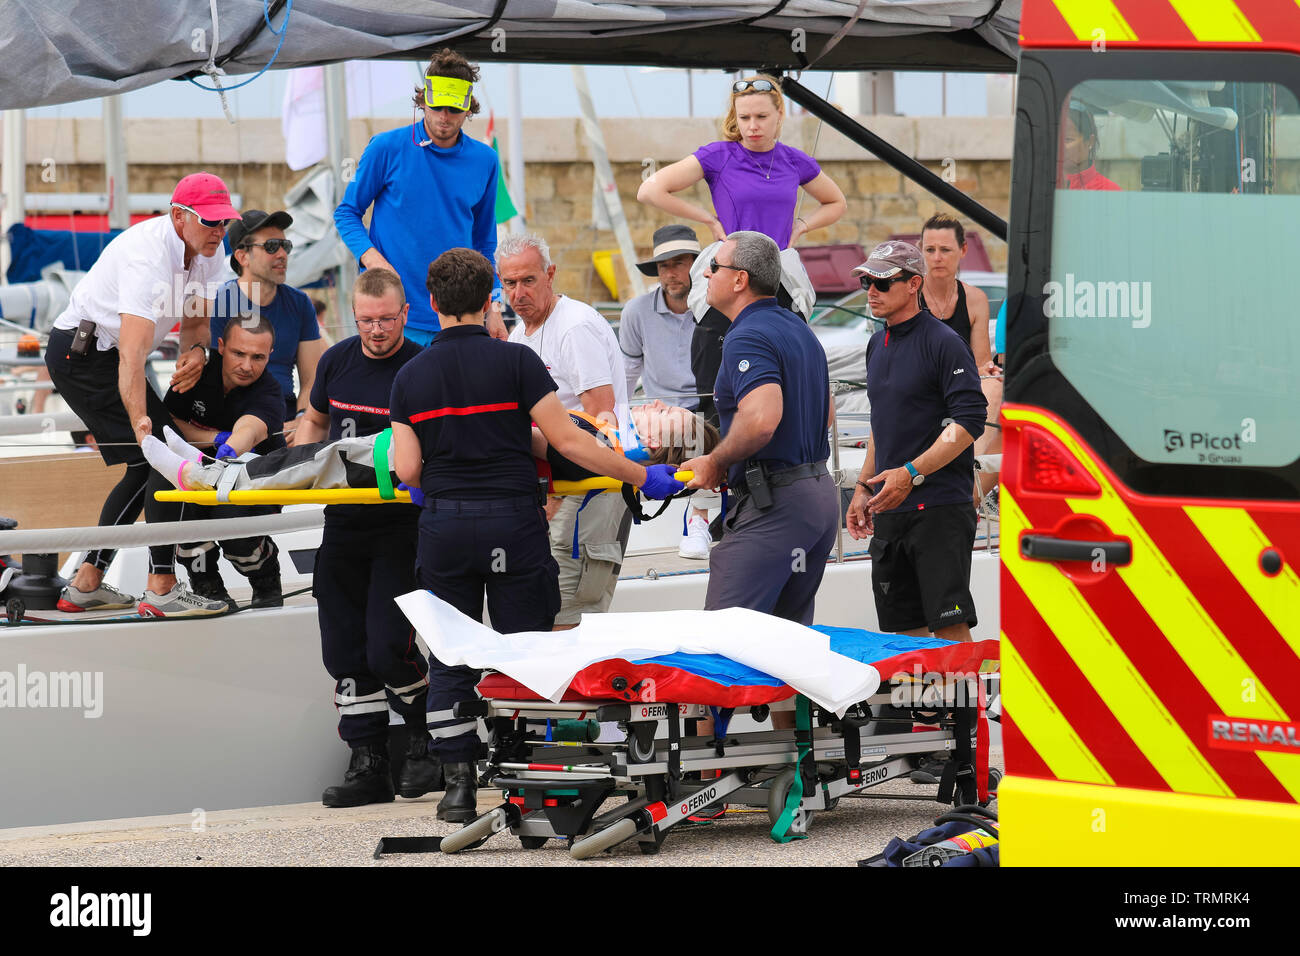 SWISS NAUTIC Basel III - Accident - Port de Saint Tropez, France  - Giraglia - ROLEX SAILING - June 09 2019 p.m. 16,38  Credit photo Ilona Barna Stock Photo